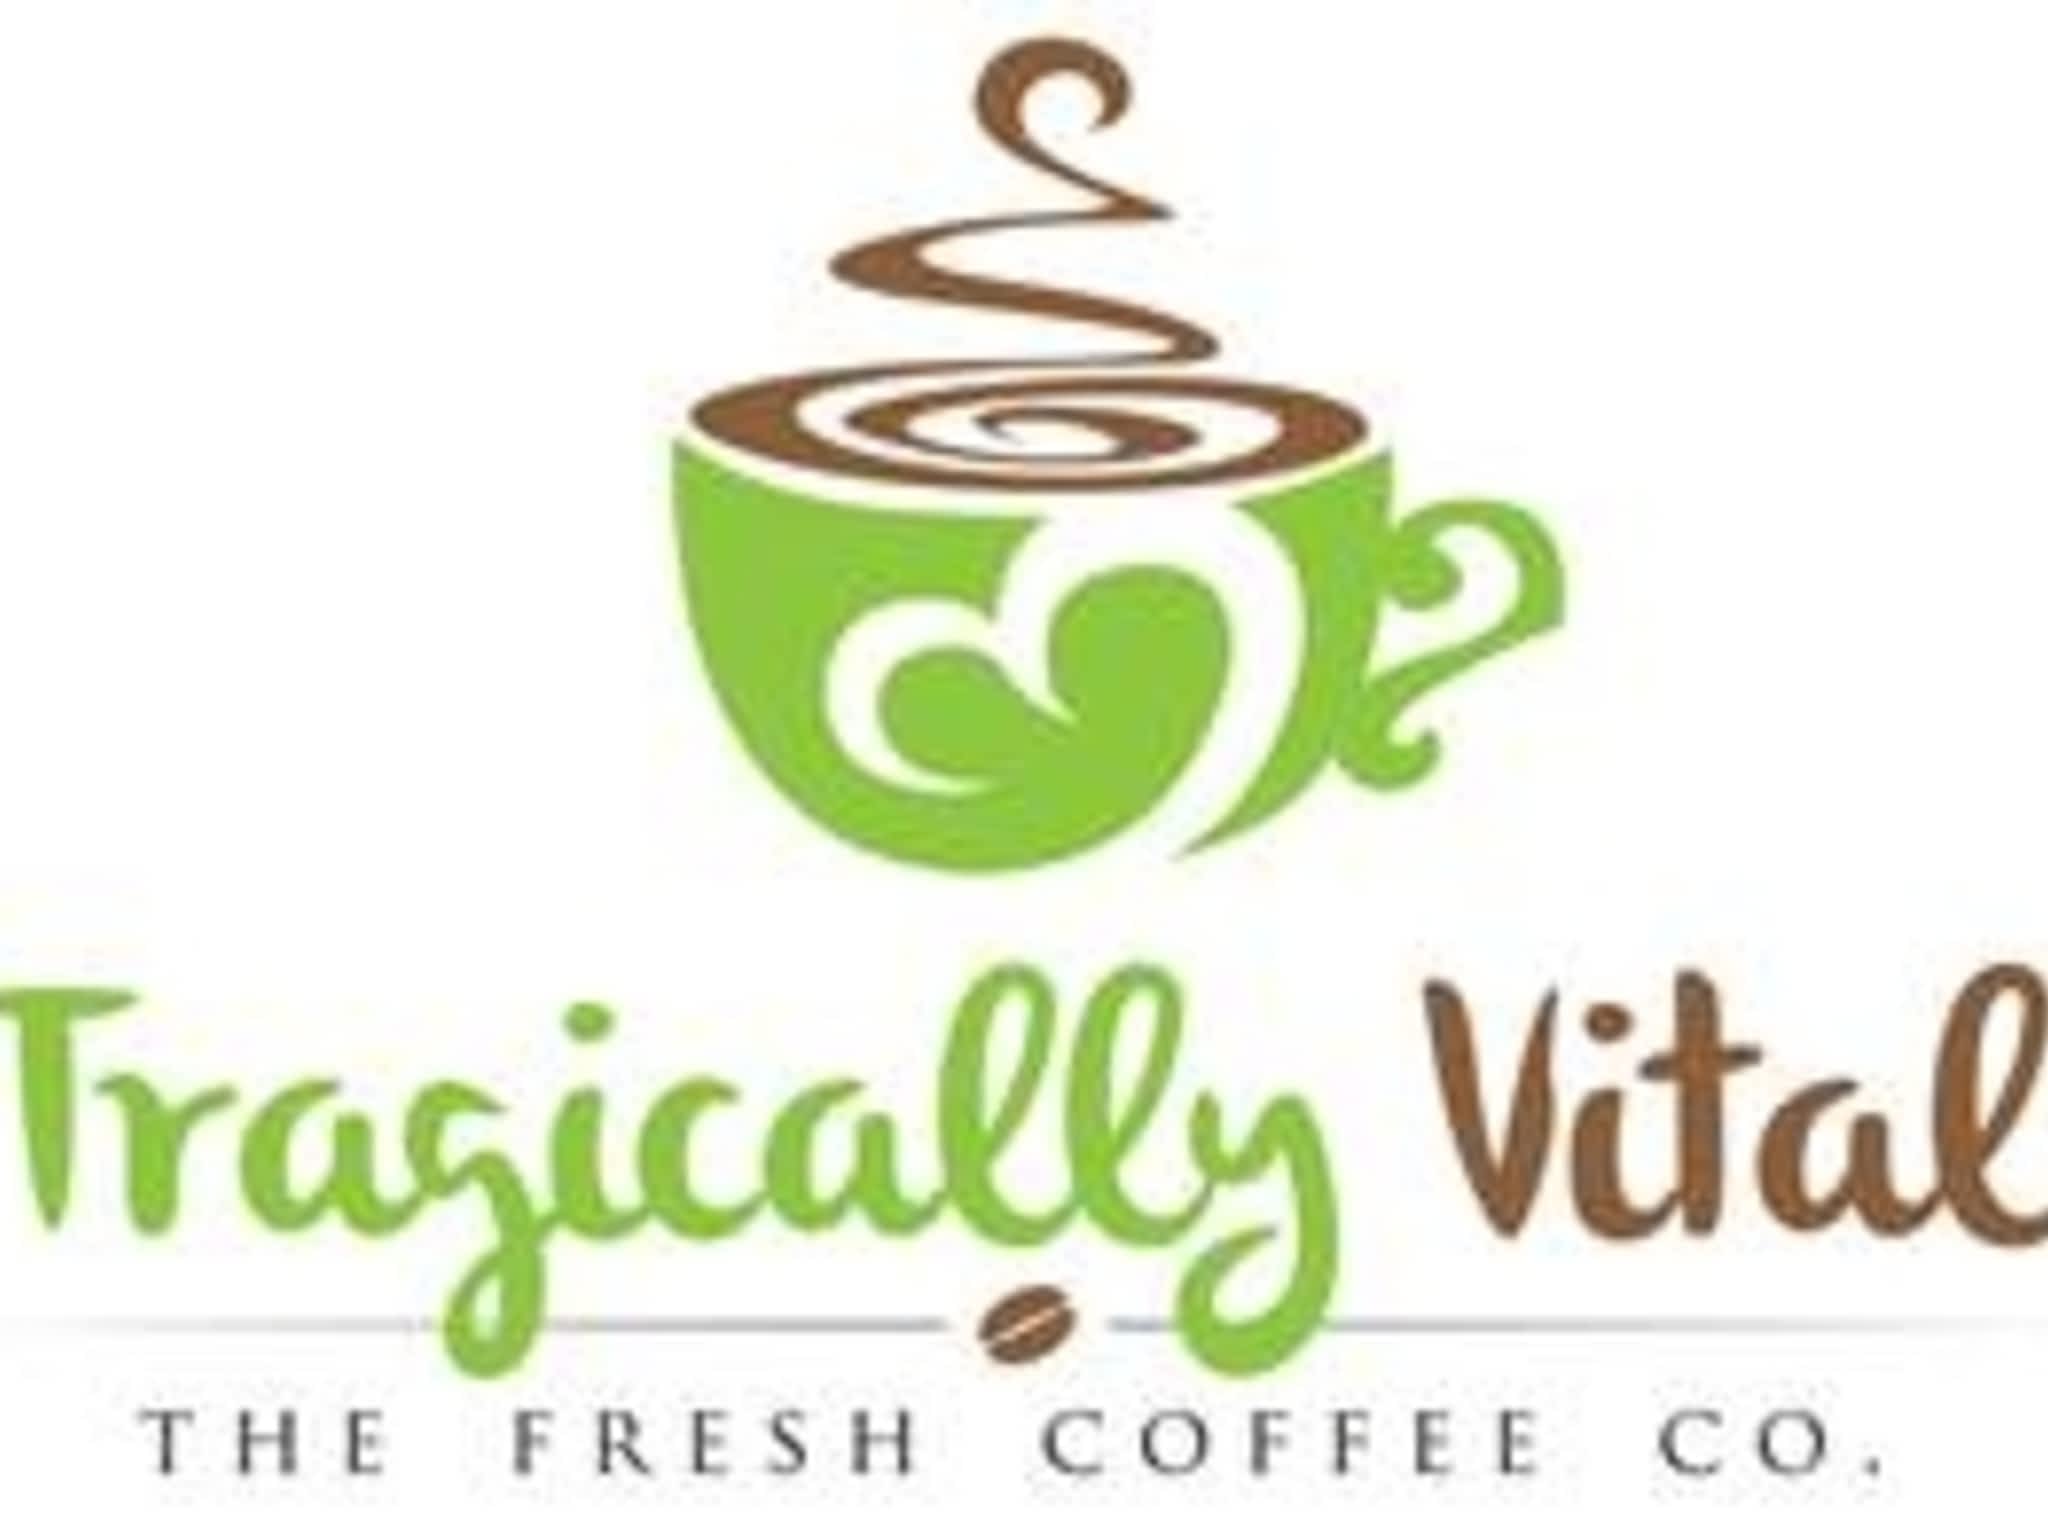 photo Tragically Vital Fresh Coffee Co